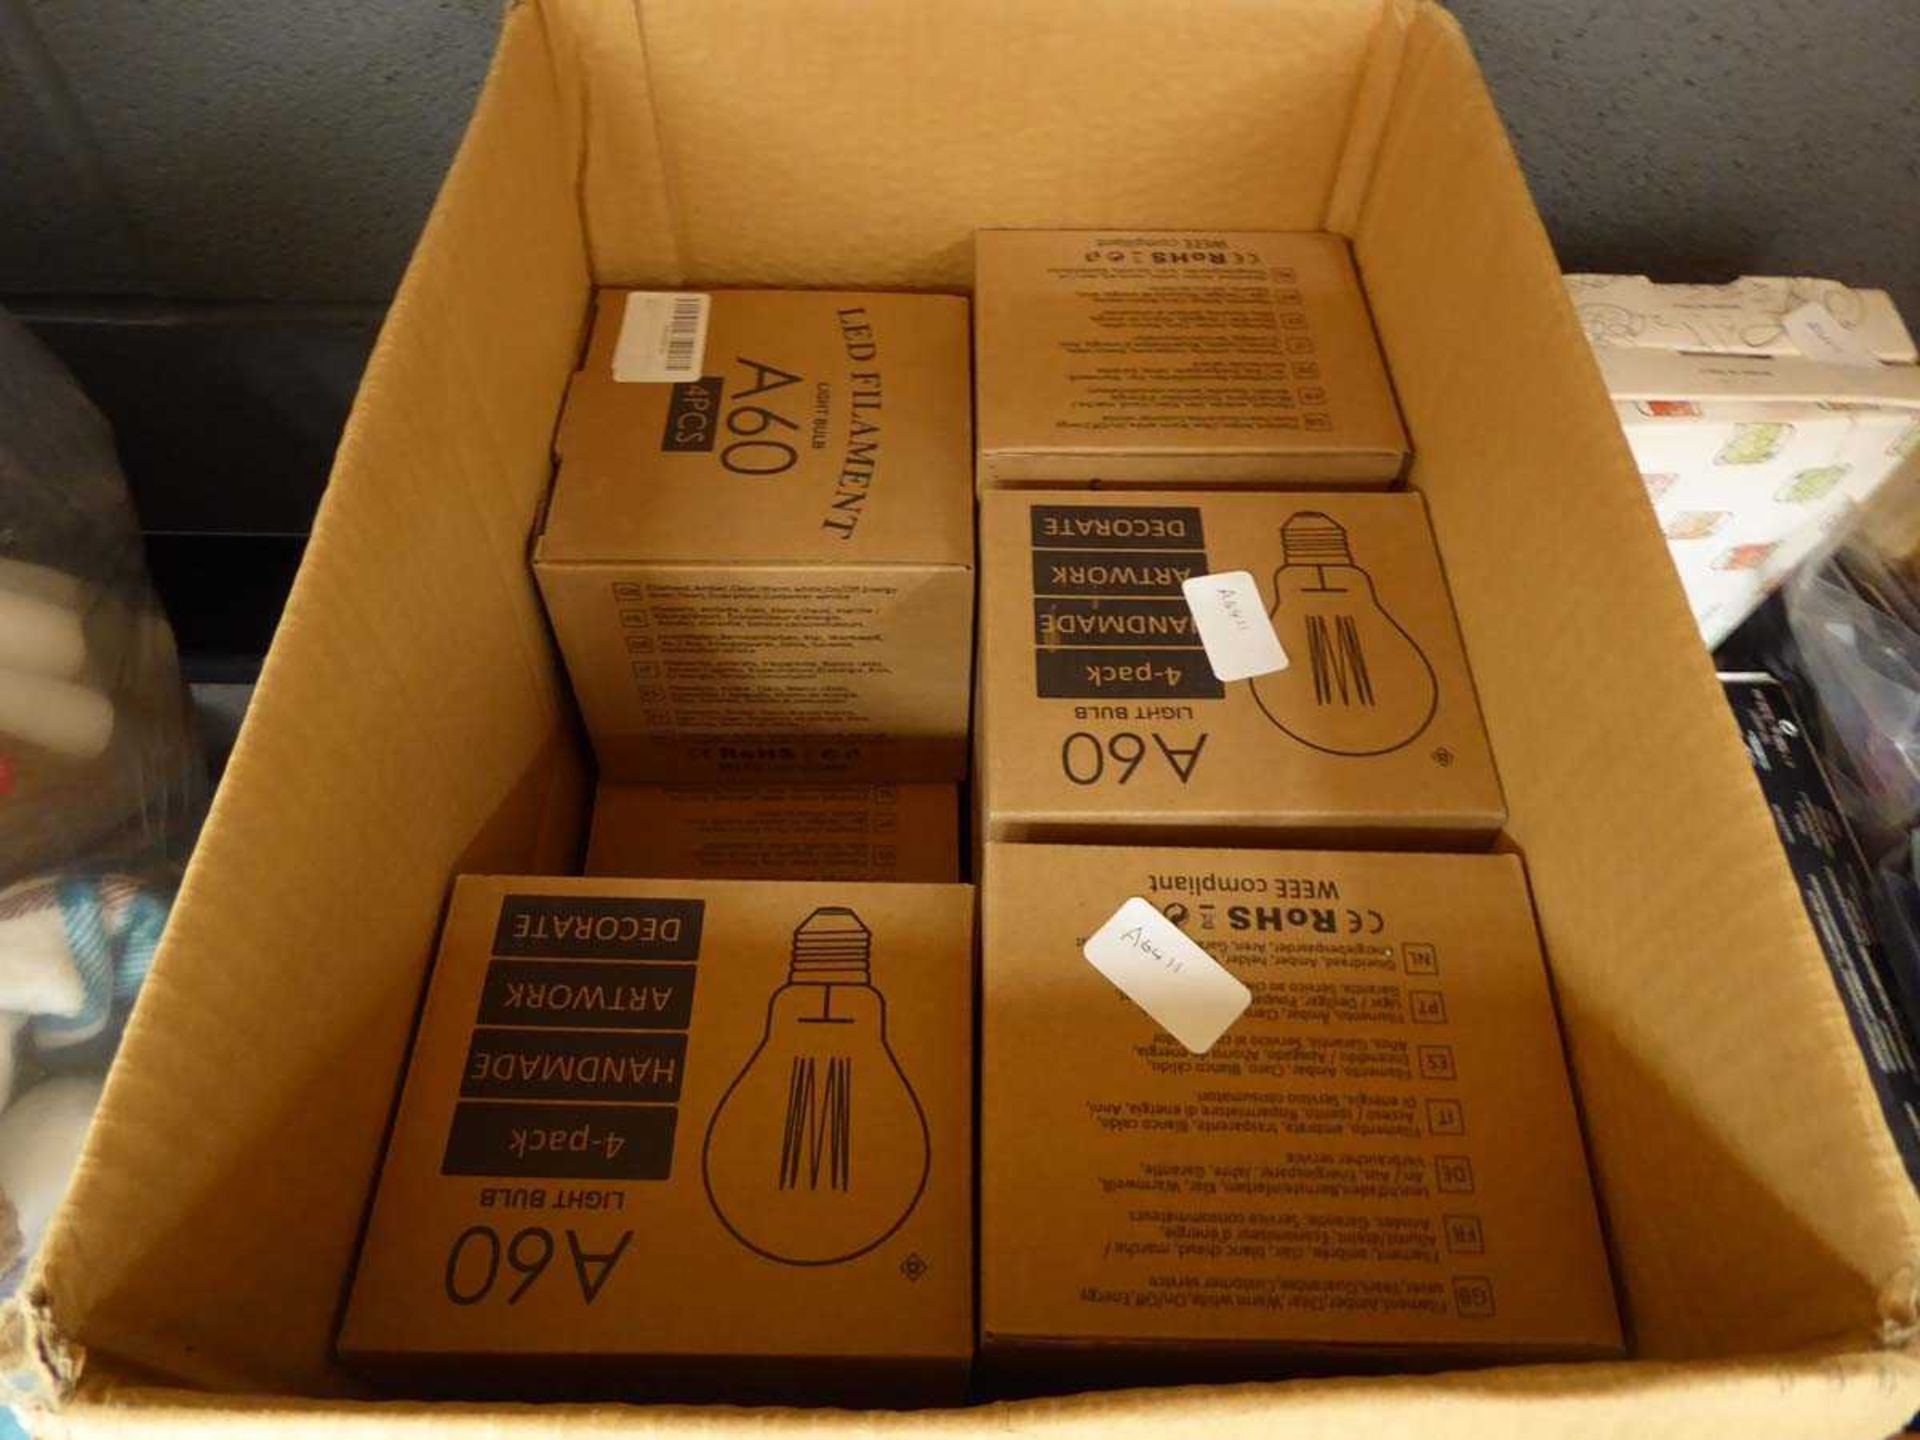 Quantity of Pineapple Core & Slices, LED filament light bulbs, Nespresso coffee pods, purses, etc. - Image 3 of 3